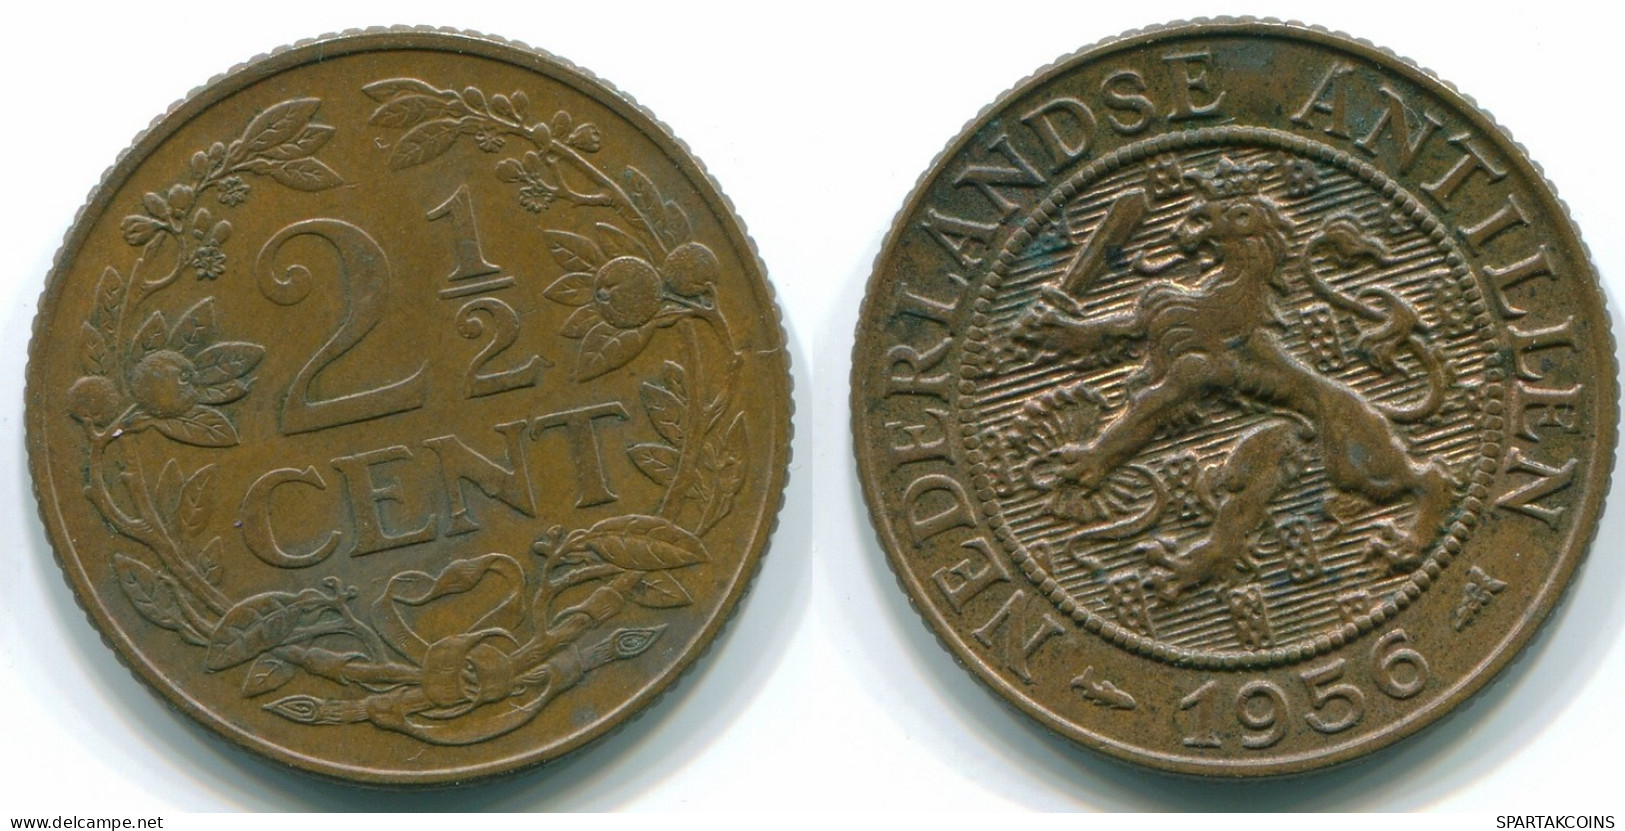 2 1/2 CENT 1956 CURACAO NÉERLANDAIS NETHERLANDS Bronze Colonial Pièce #S10169.F.A - Curaçao